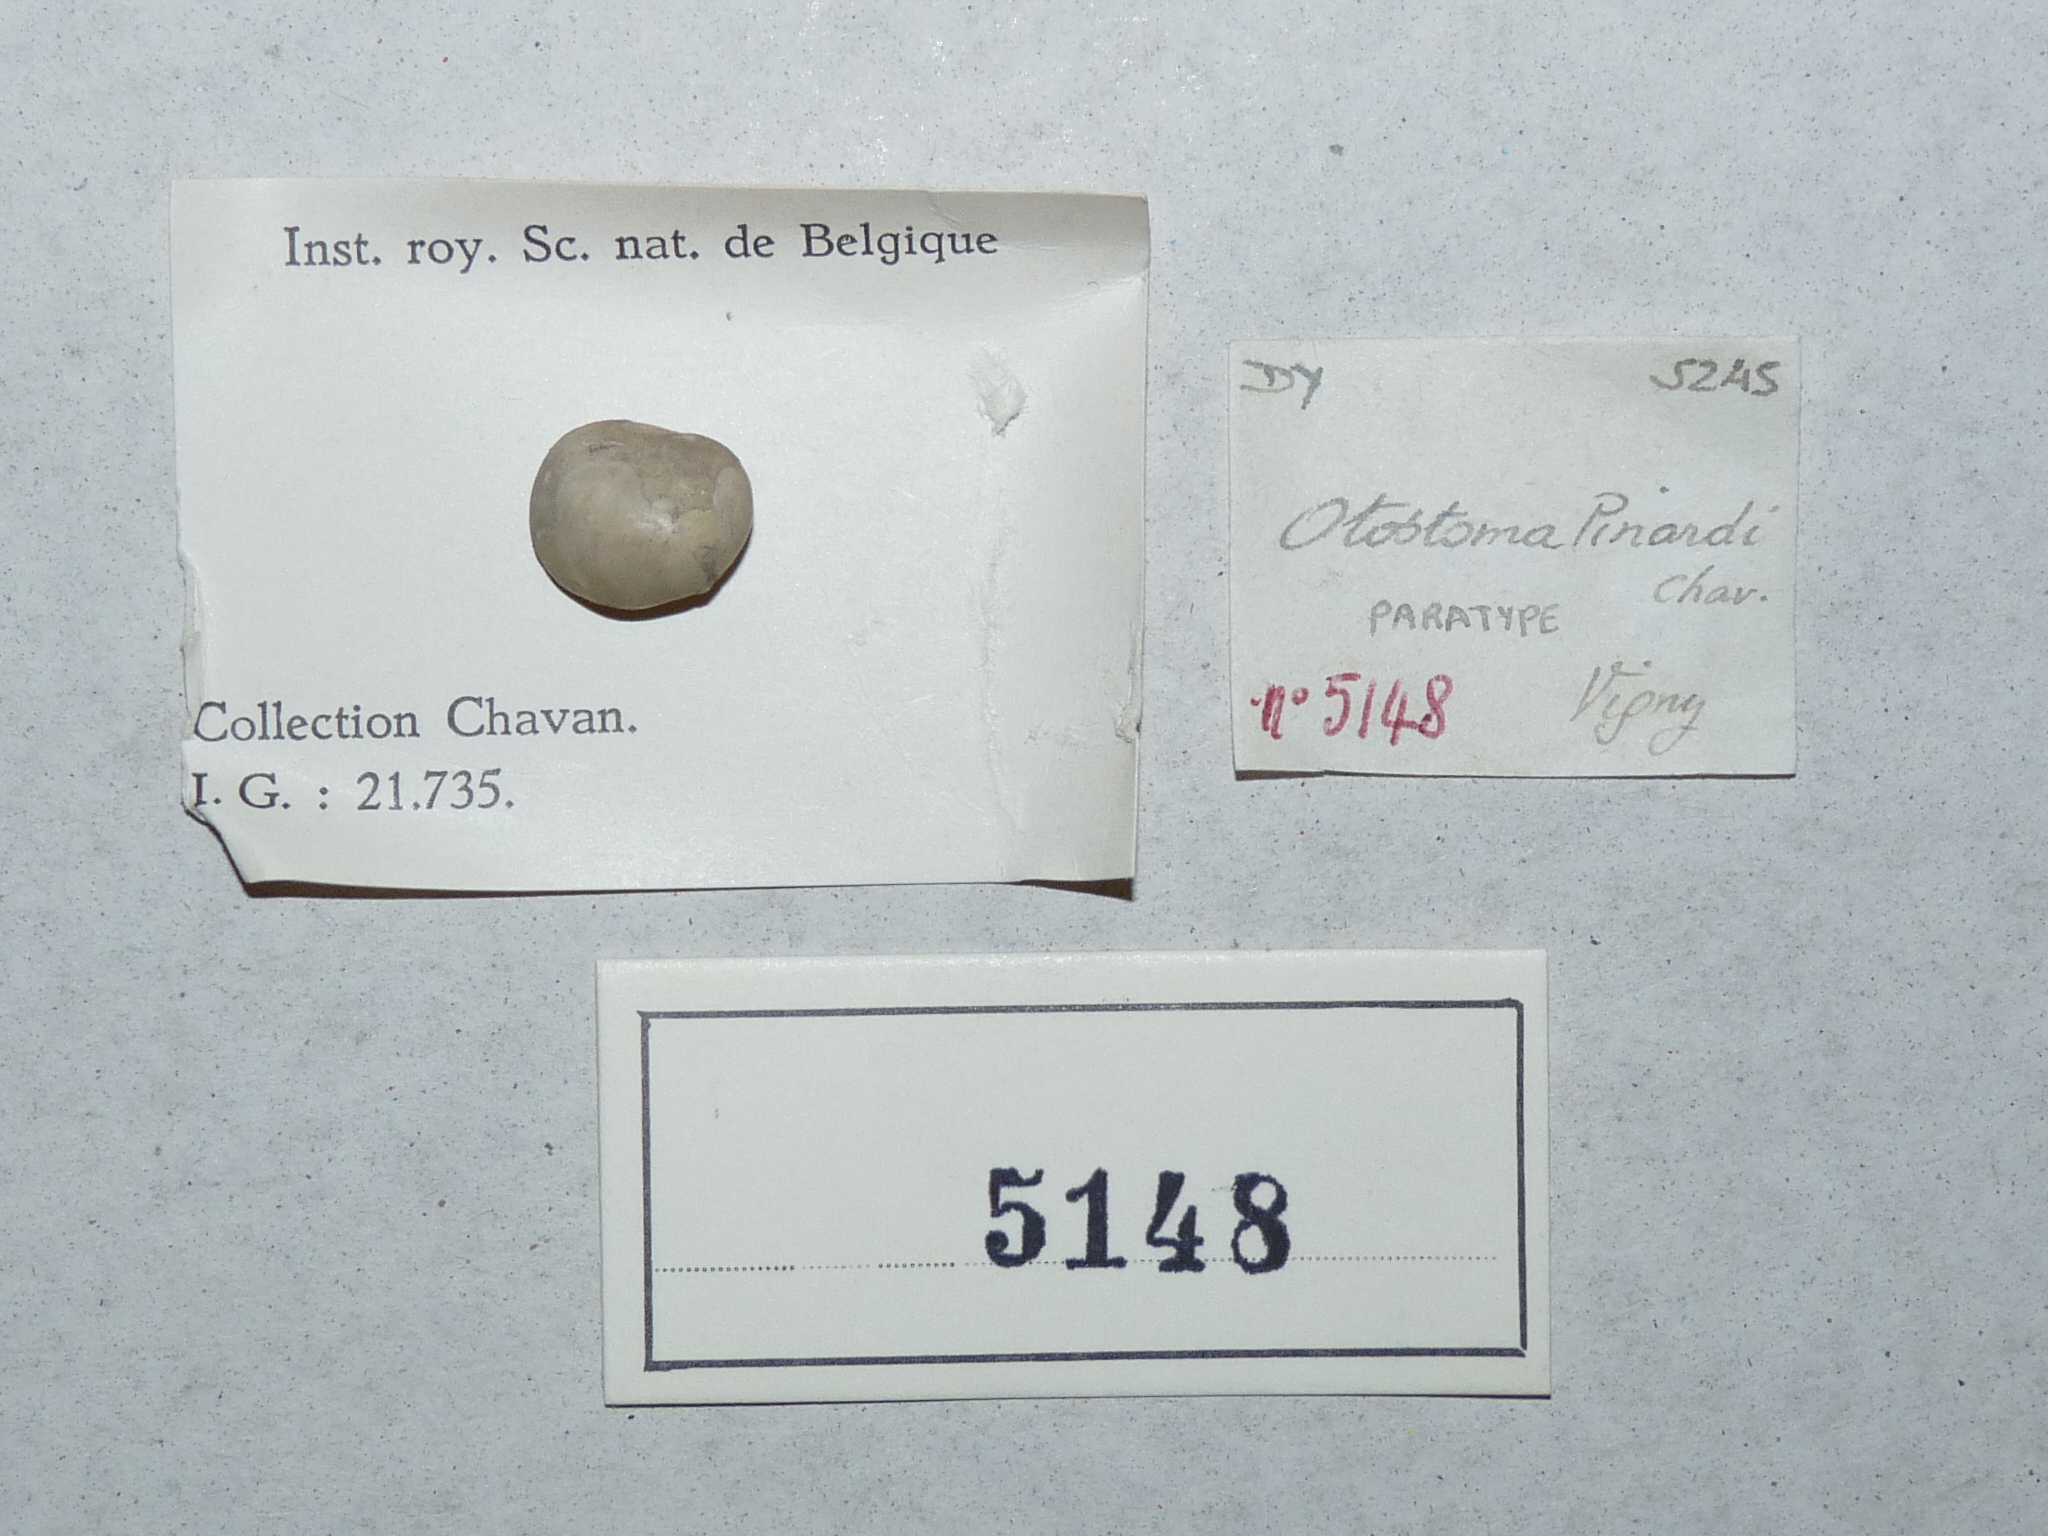 IRSNB 05148 (Otostoma pinardi) Labels